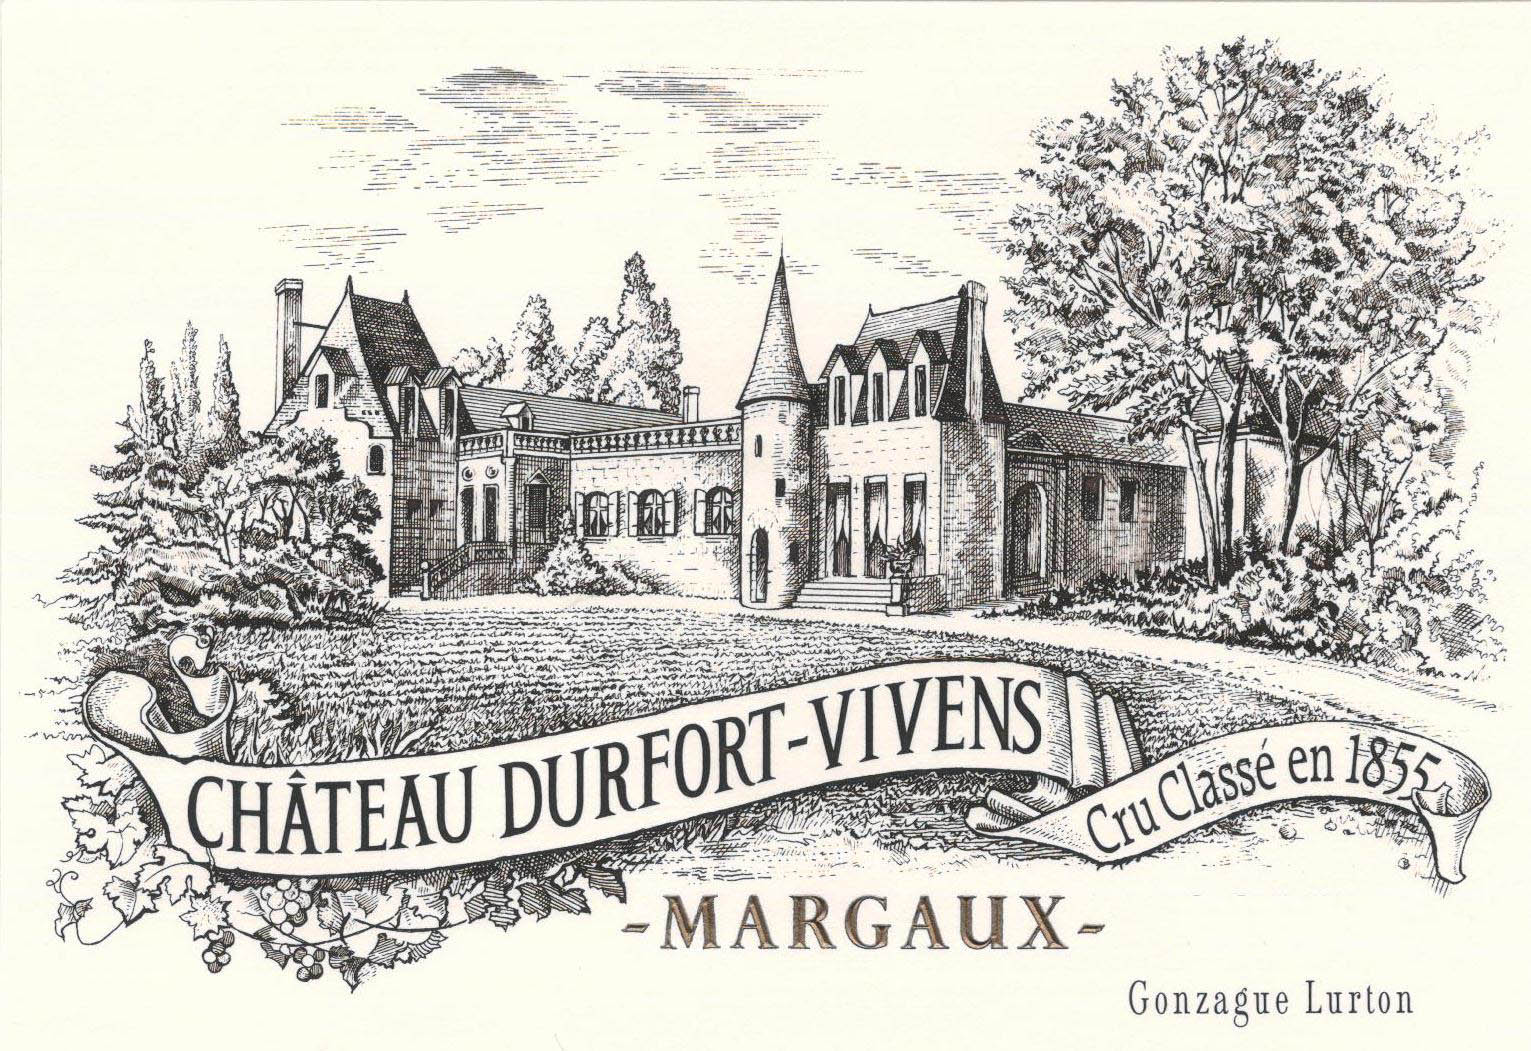 Chateau Durfort-Vivens label